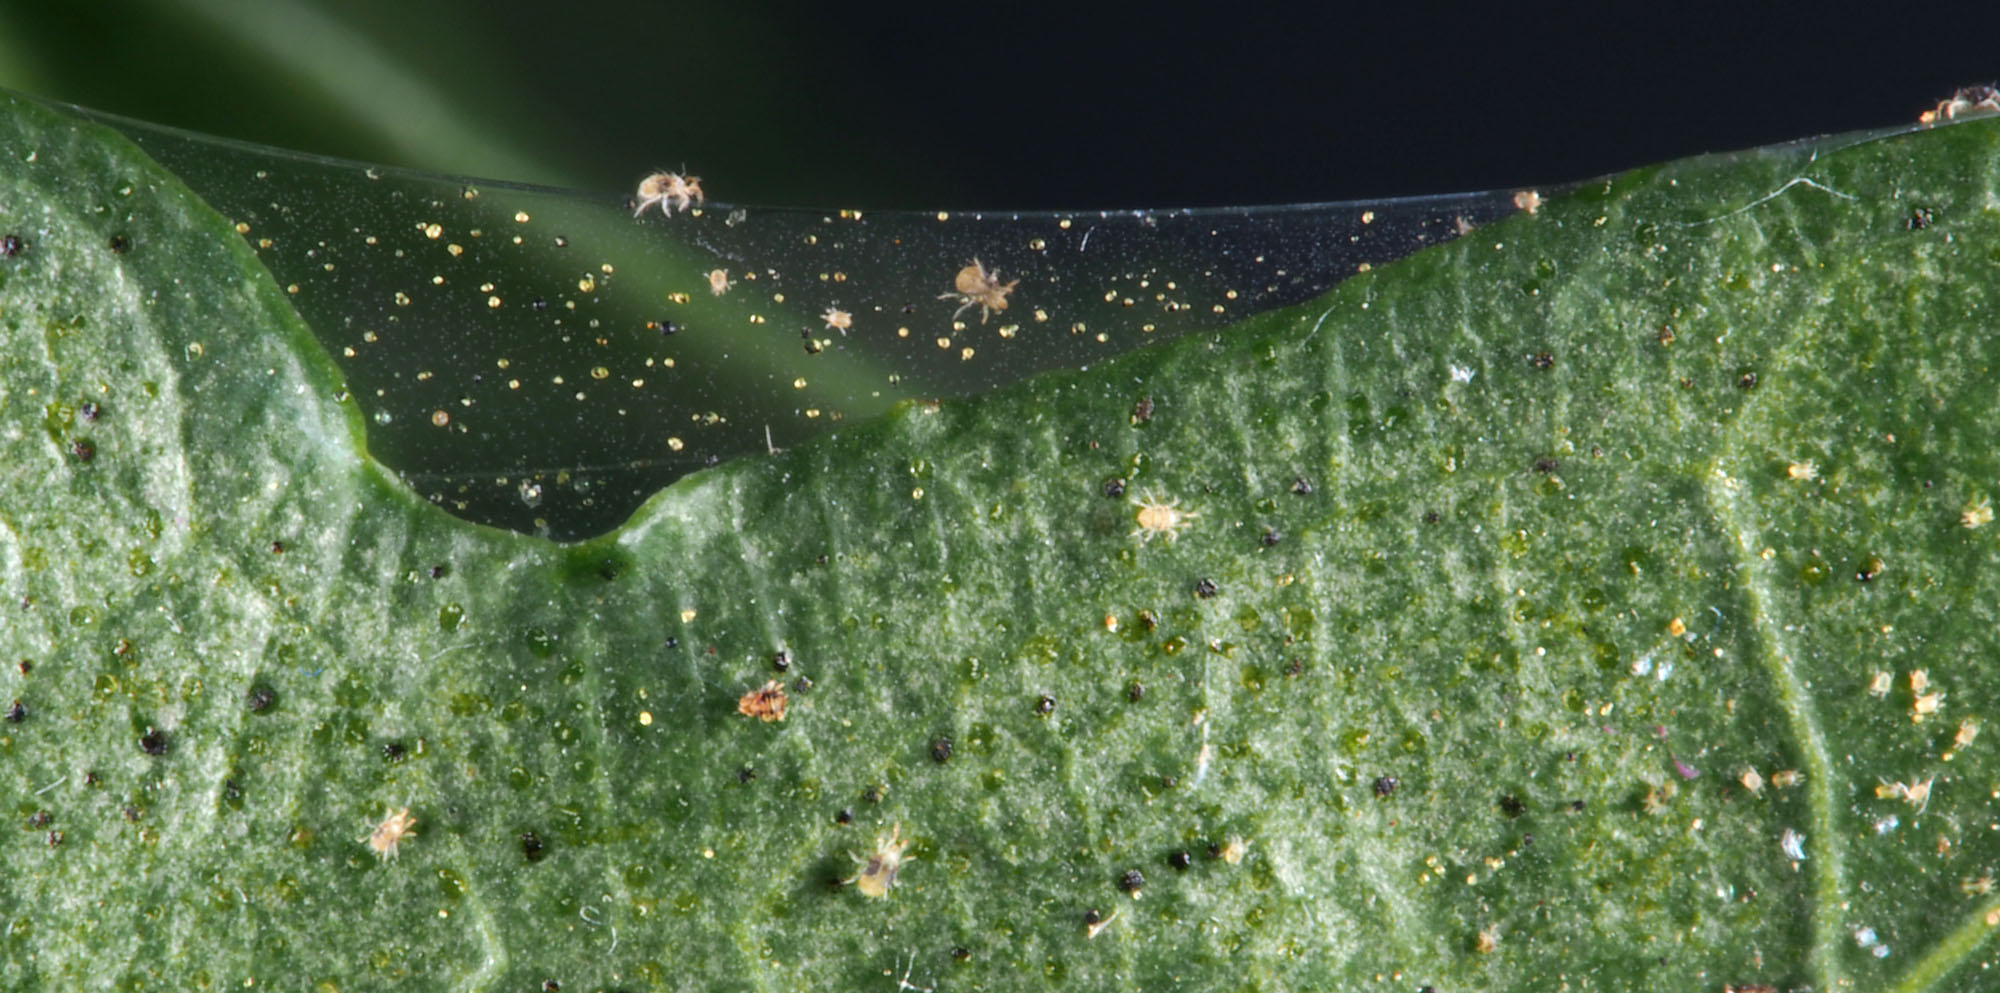 Twospotted spider mite on web